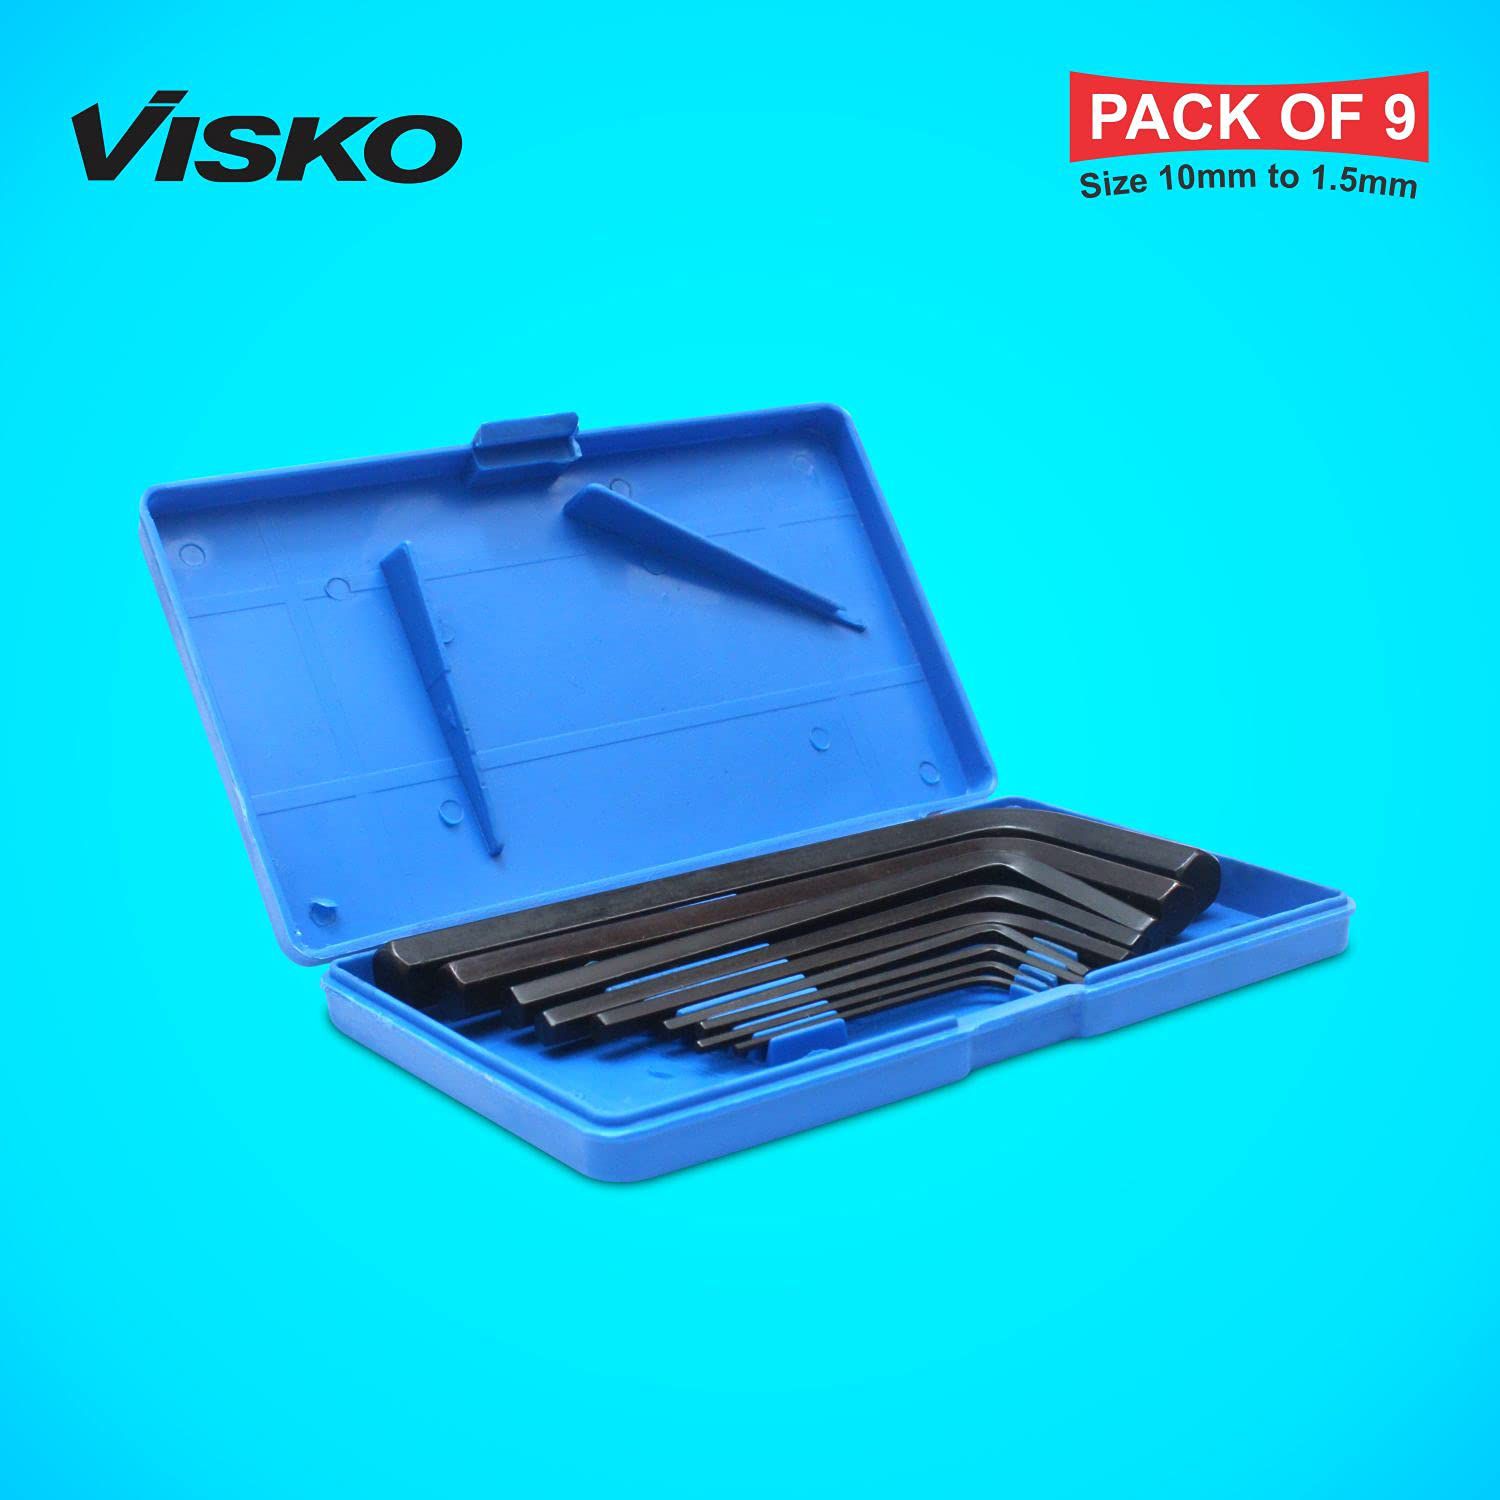 VISKO 702 AllenKey Set  (Pack of 9)